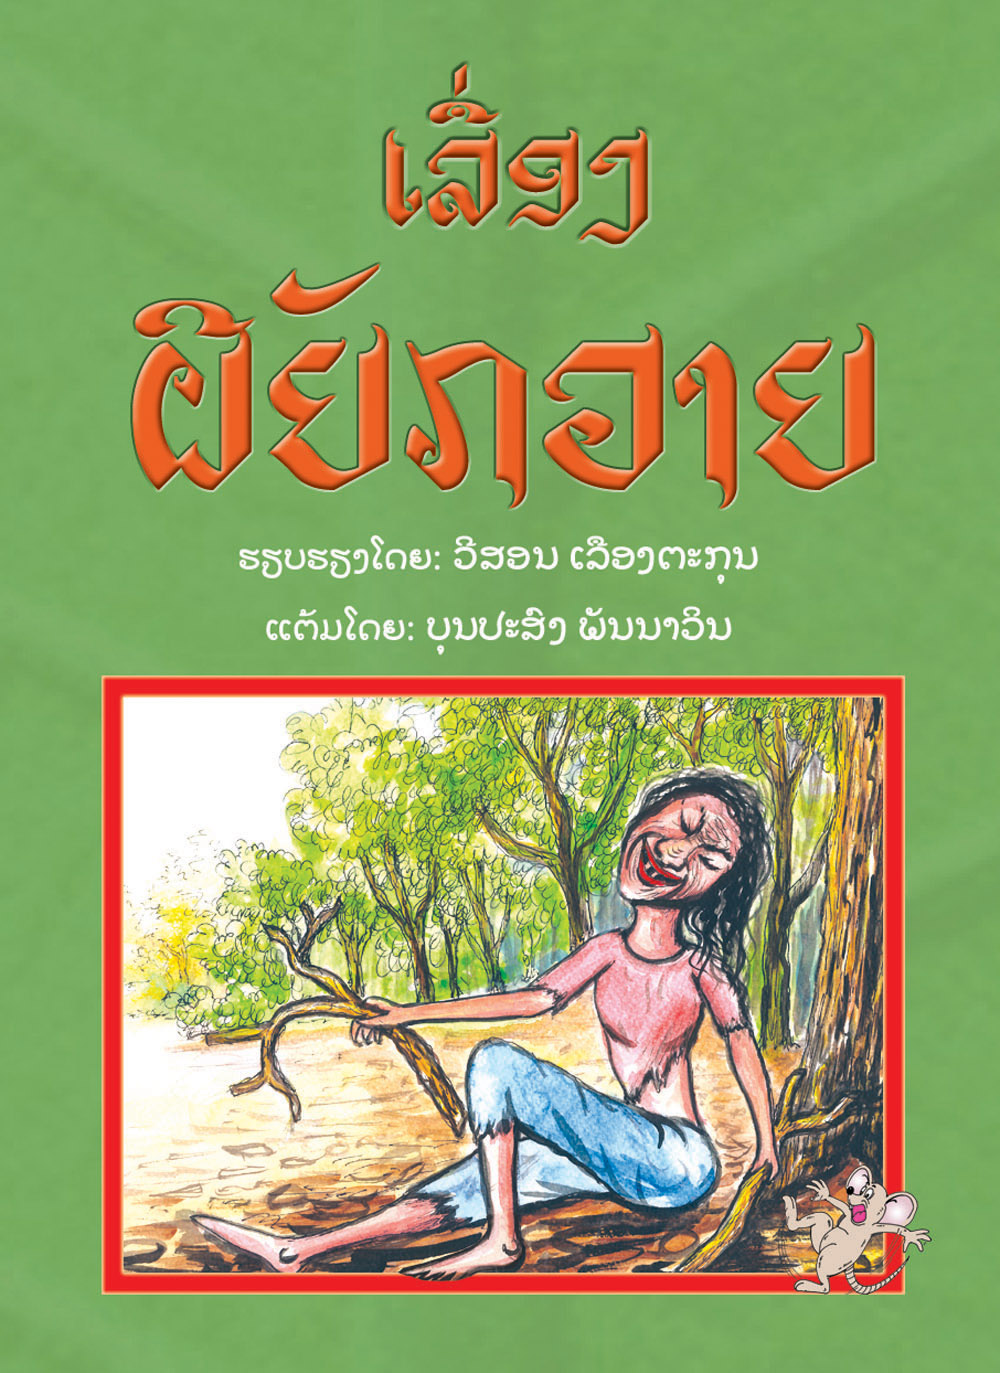 Phiiyakvai large book cover, published in Lao language